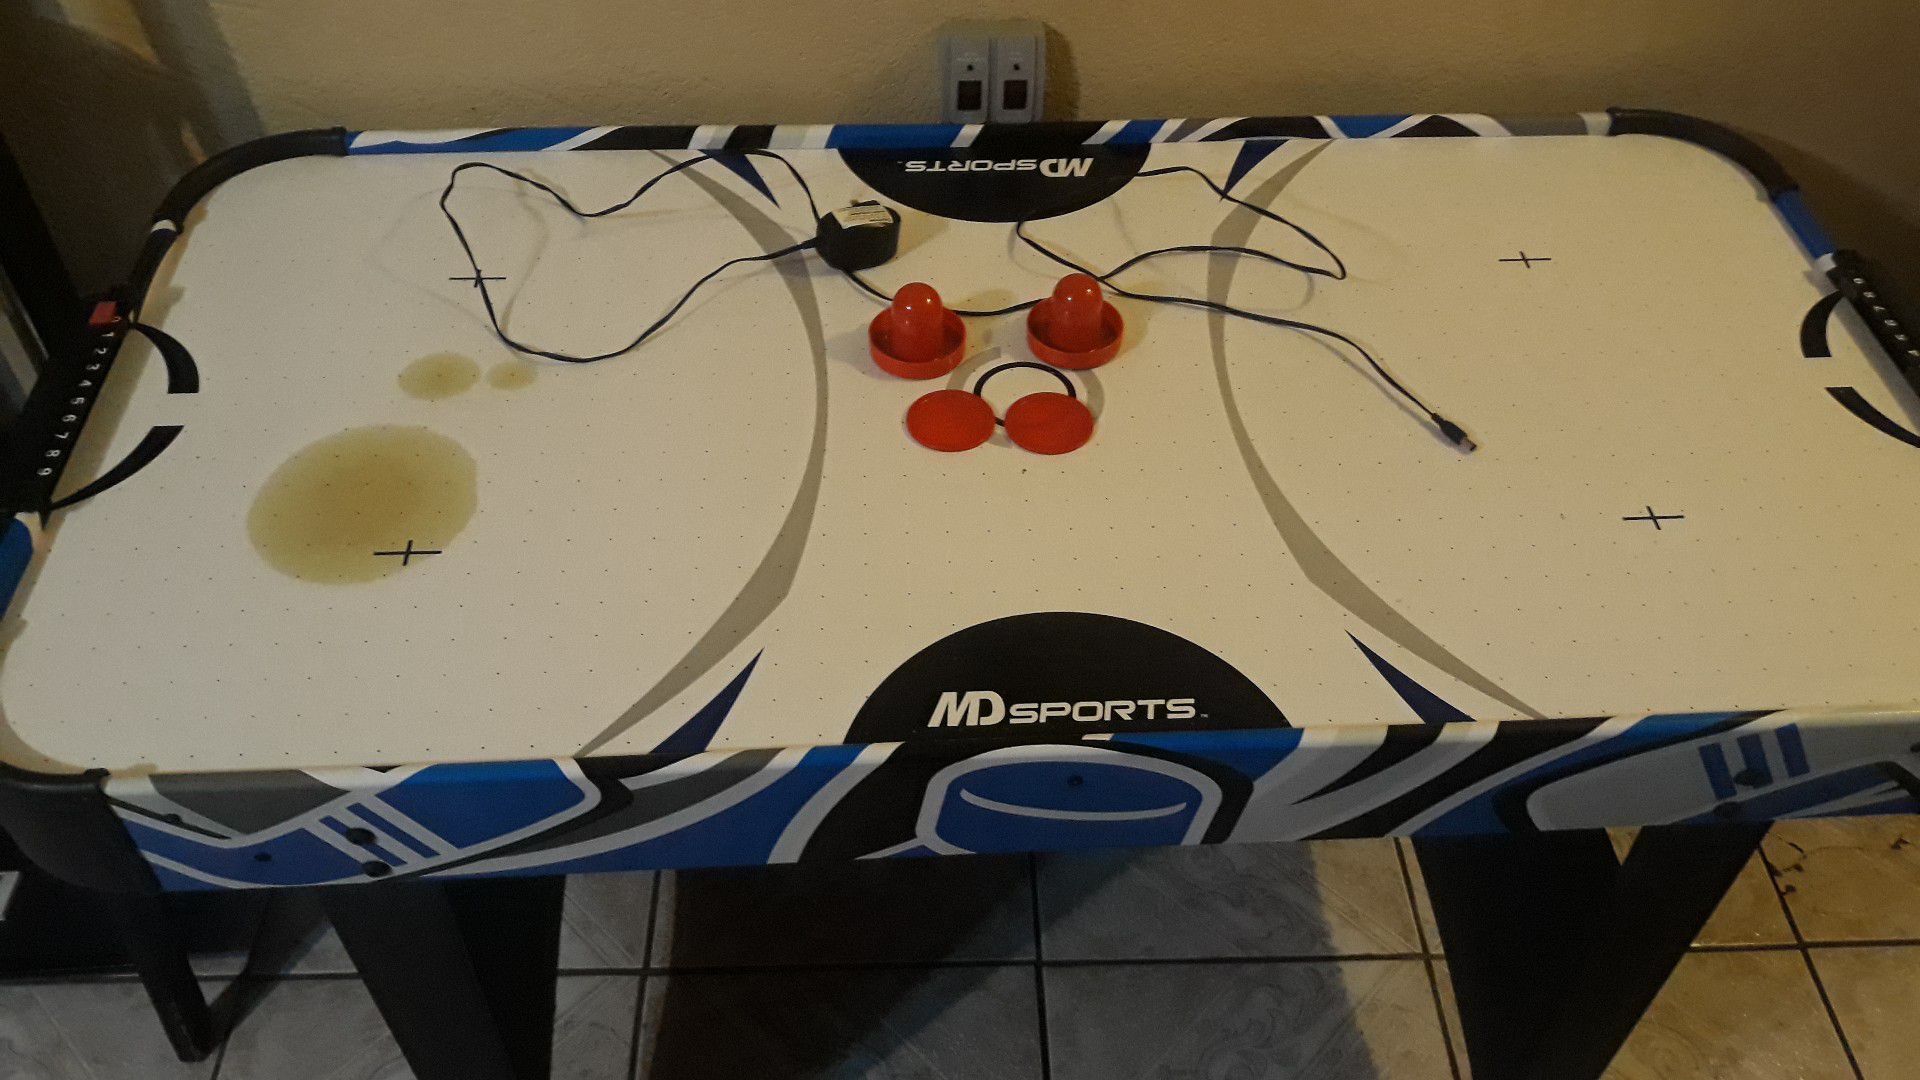 MD Sports Air Hockey Table